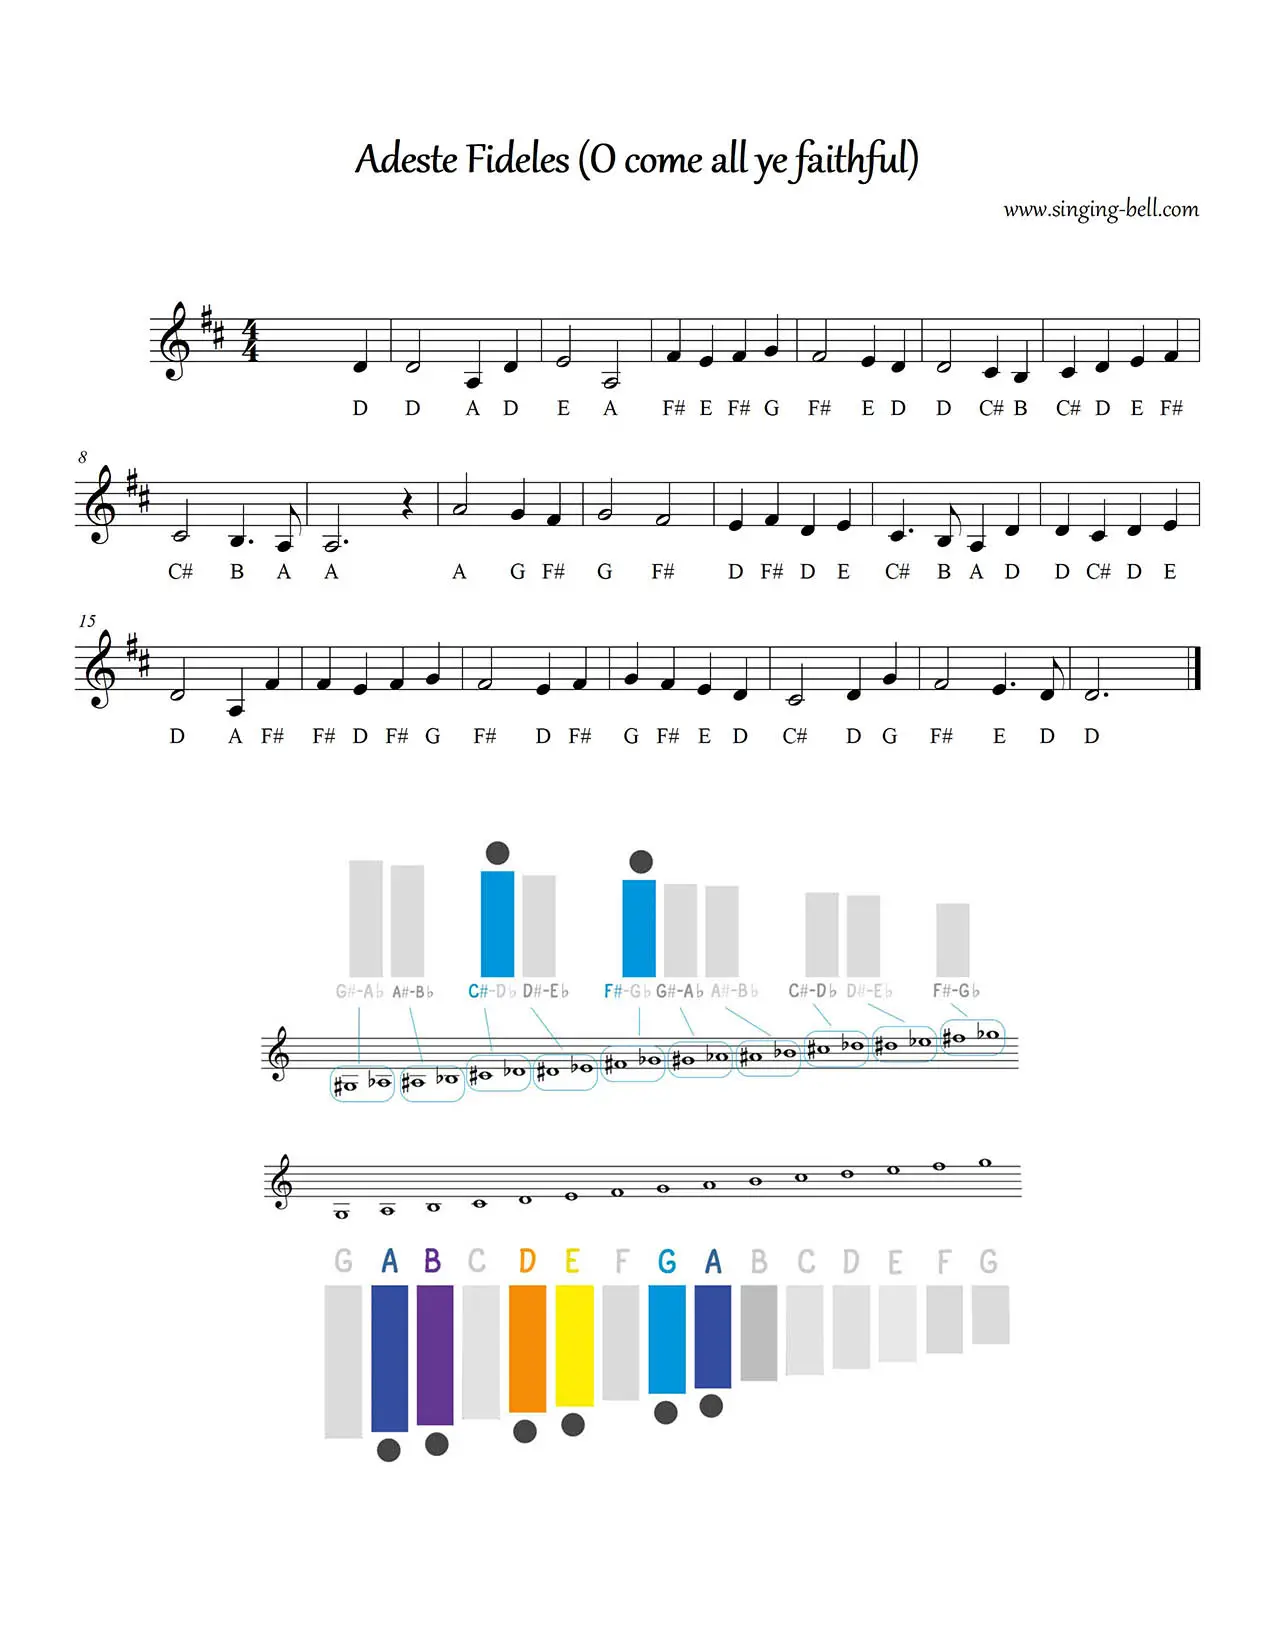 Adeste fideles (O Come, All Ye Faithful) free glockenspiel sheet music notes chart pdf